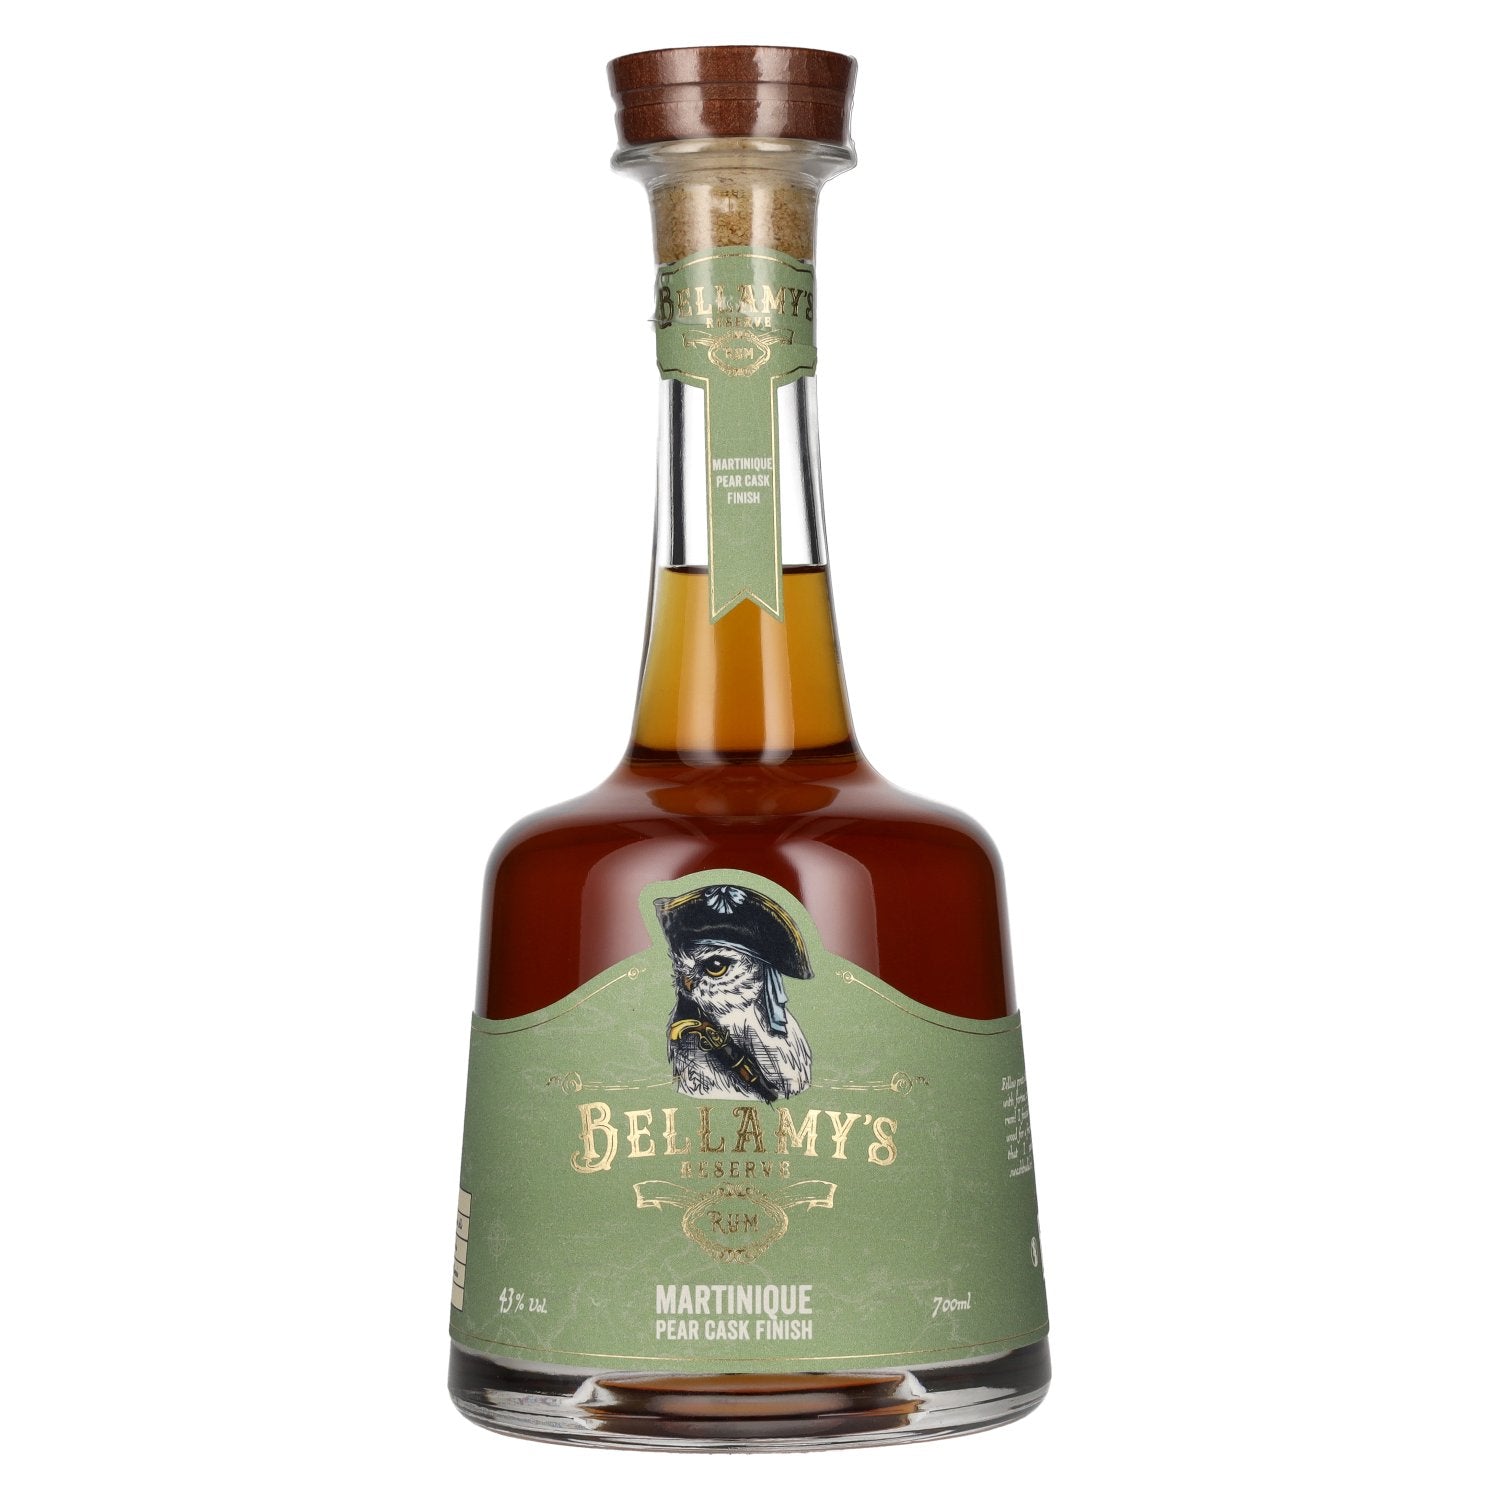 Bellamy's Reserve Rum MARTINIQUE PEAR CASK FINISH 43% Vol. 0,7l